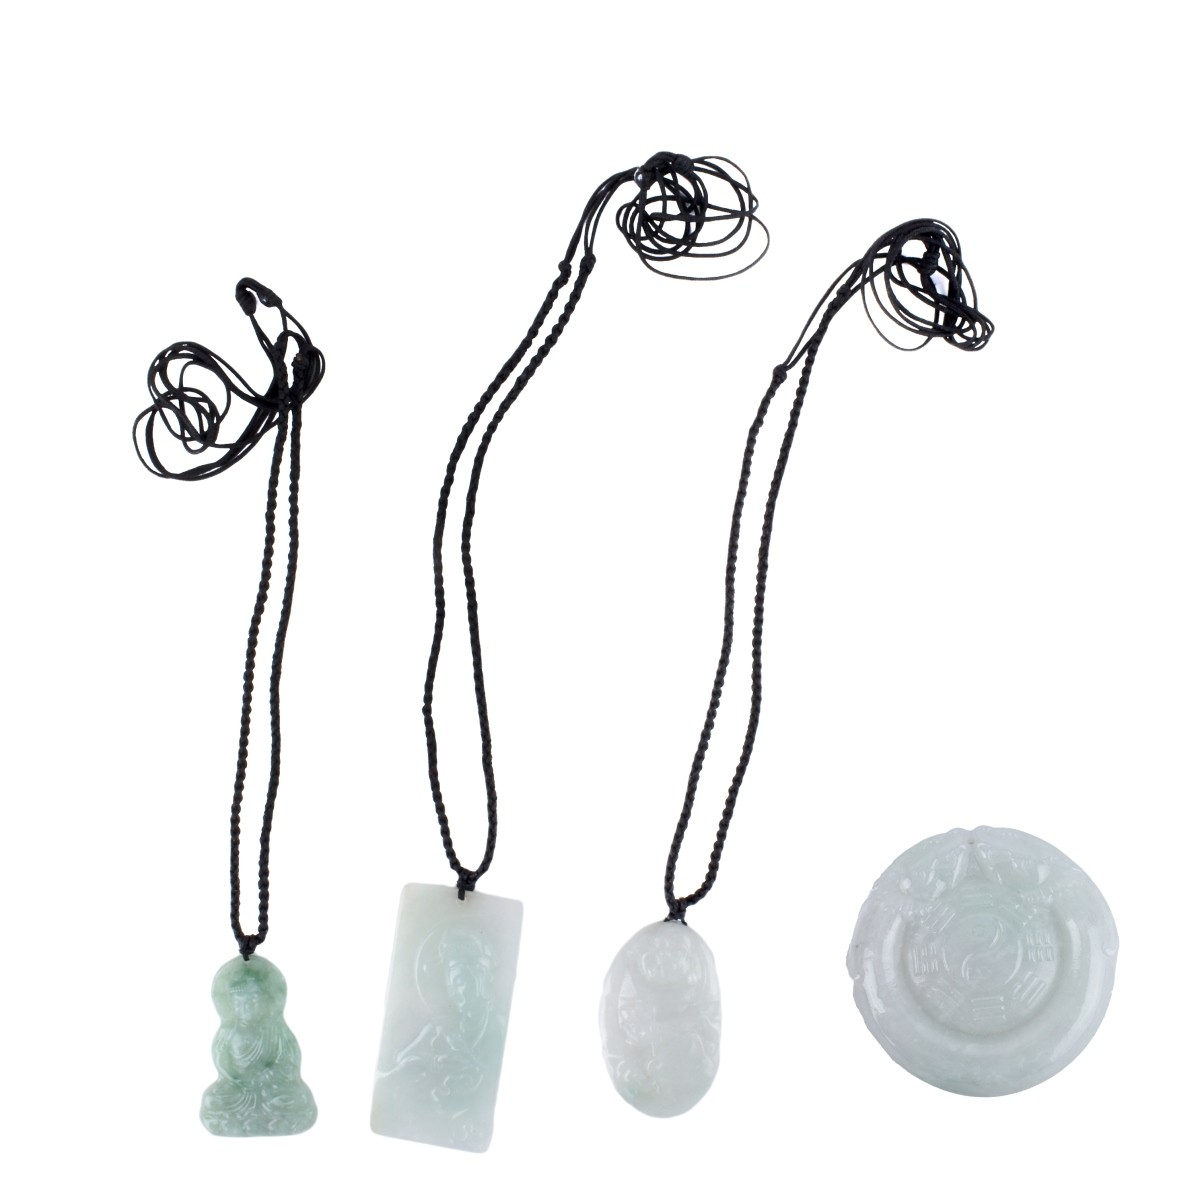 Four Jade Pendant Necklaces